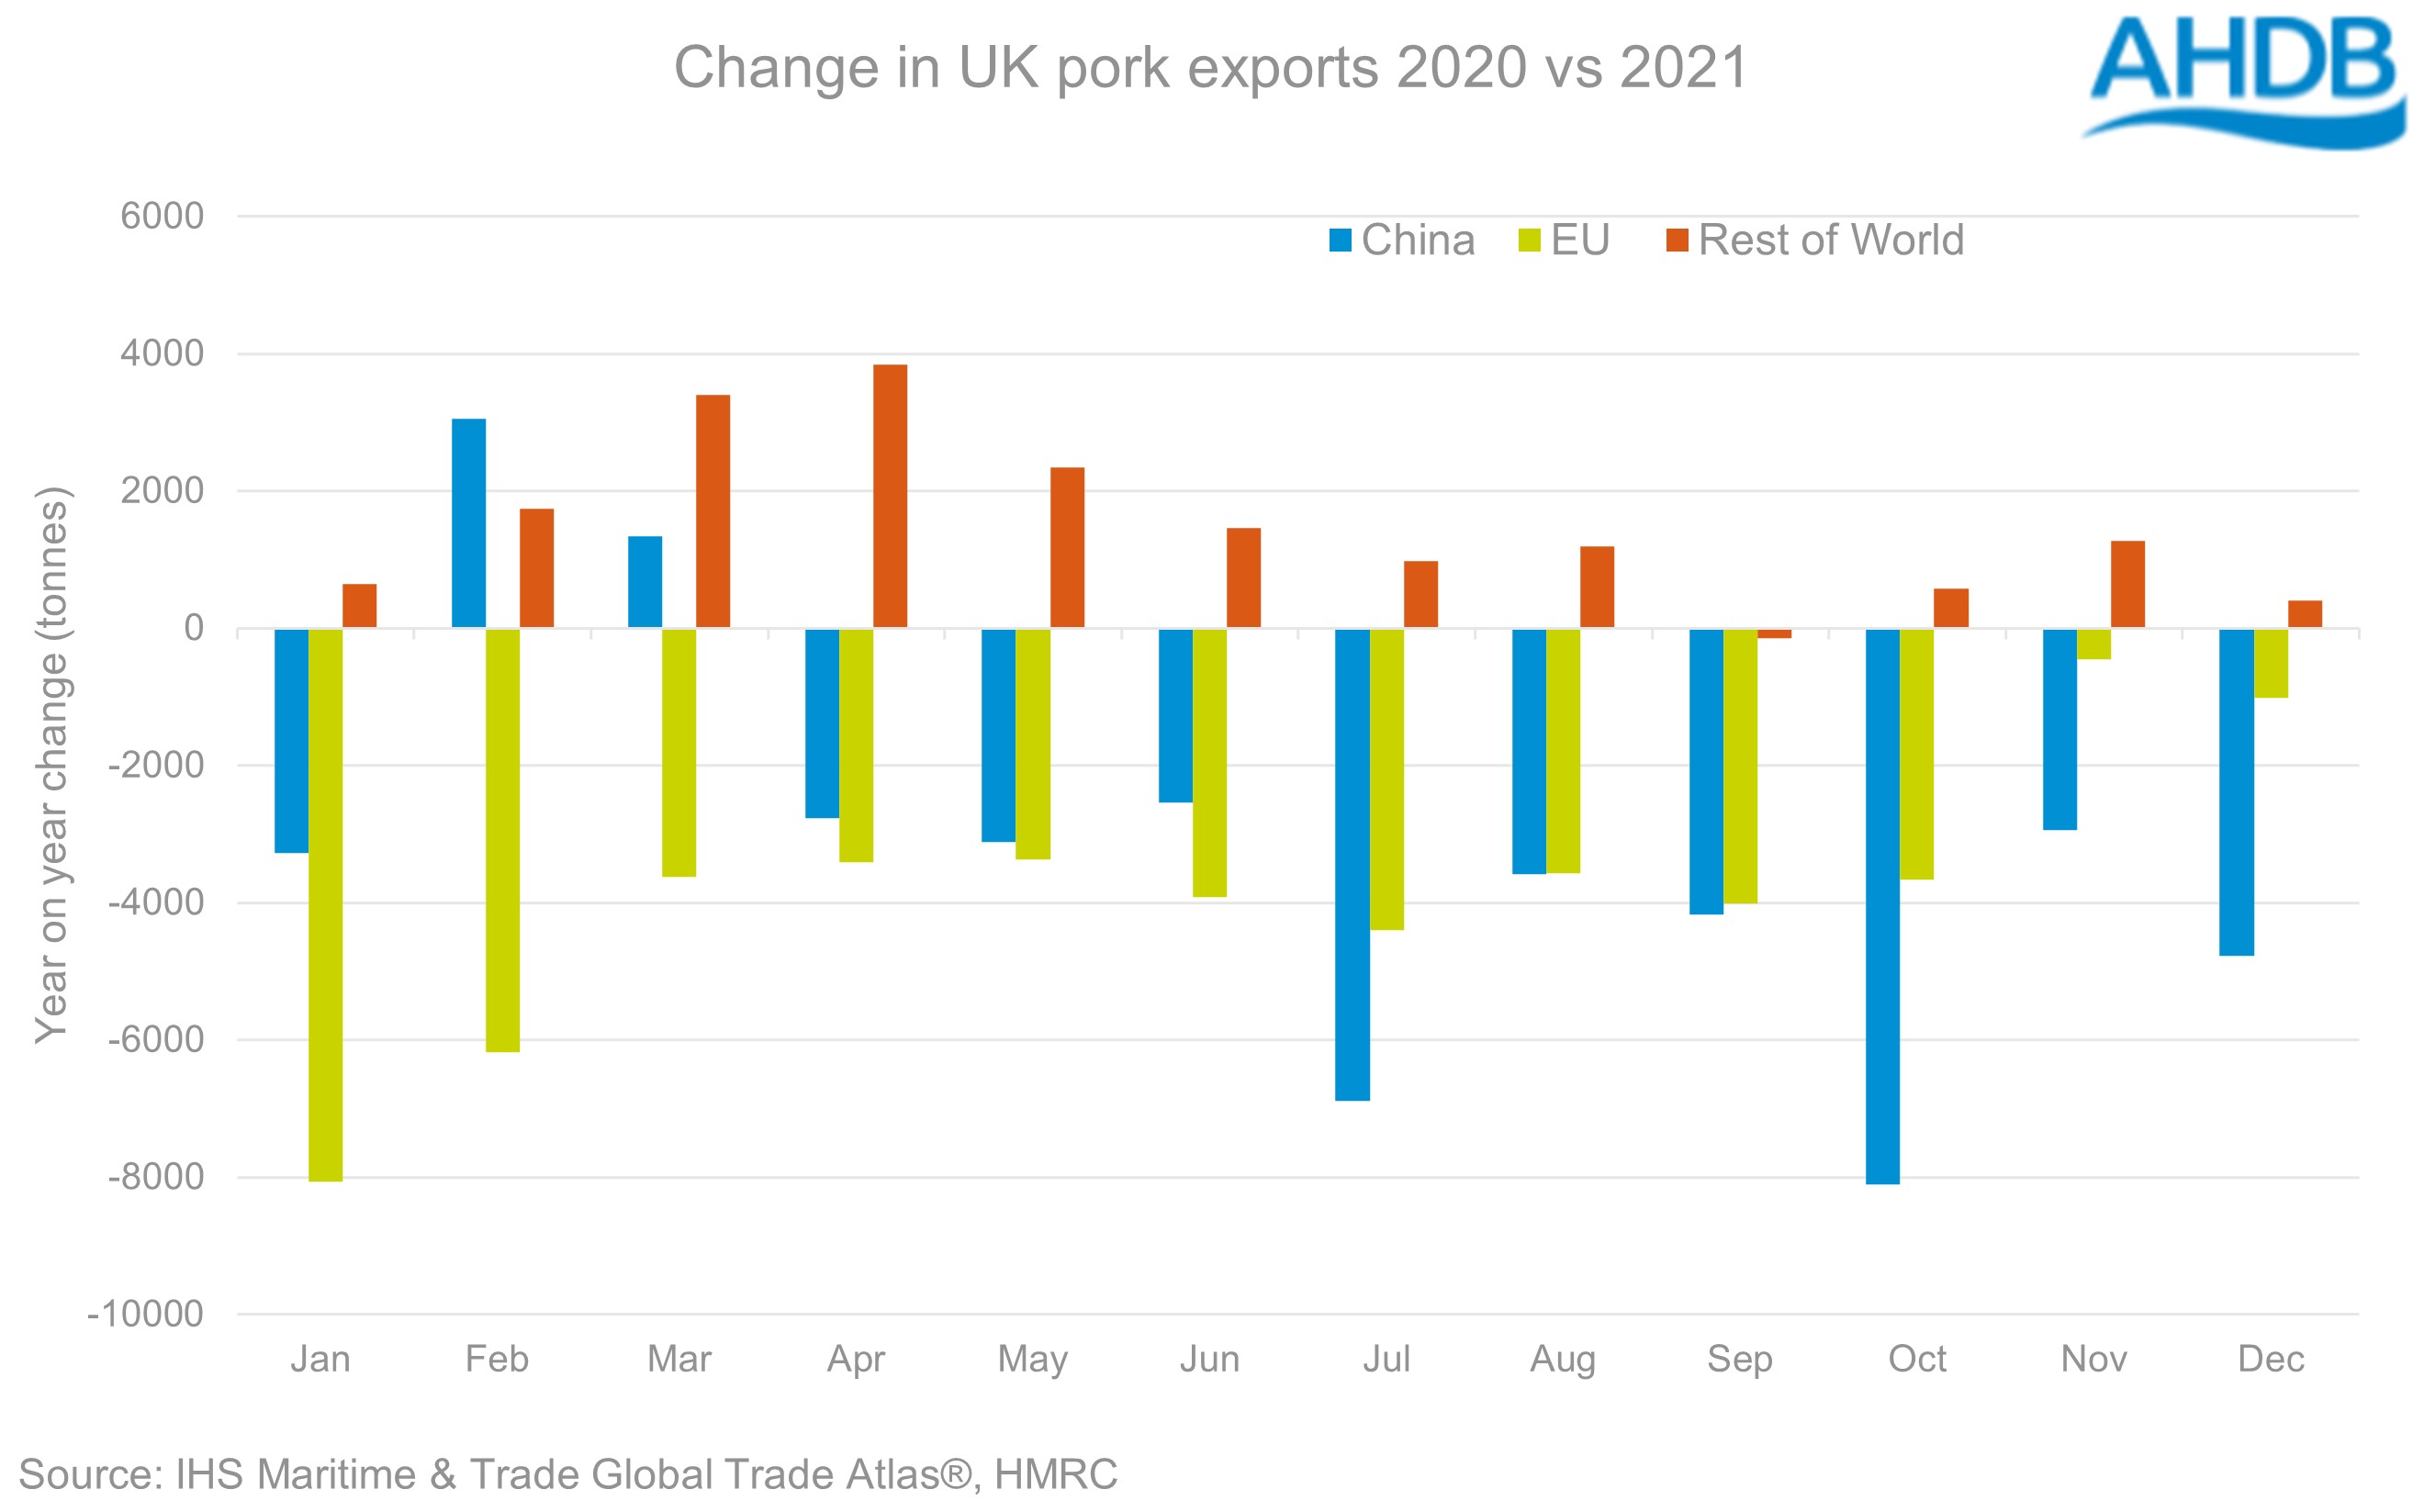 2021 change in pork exports